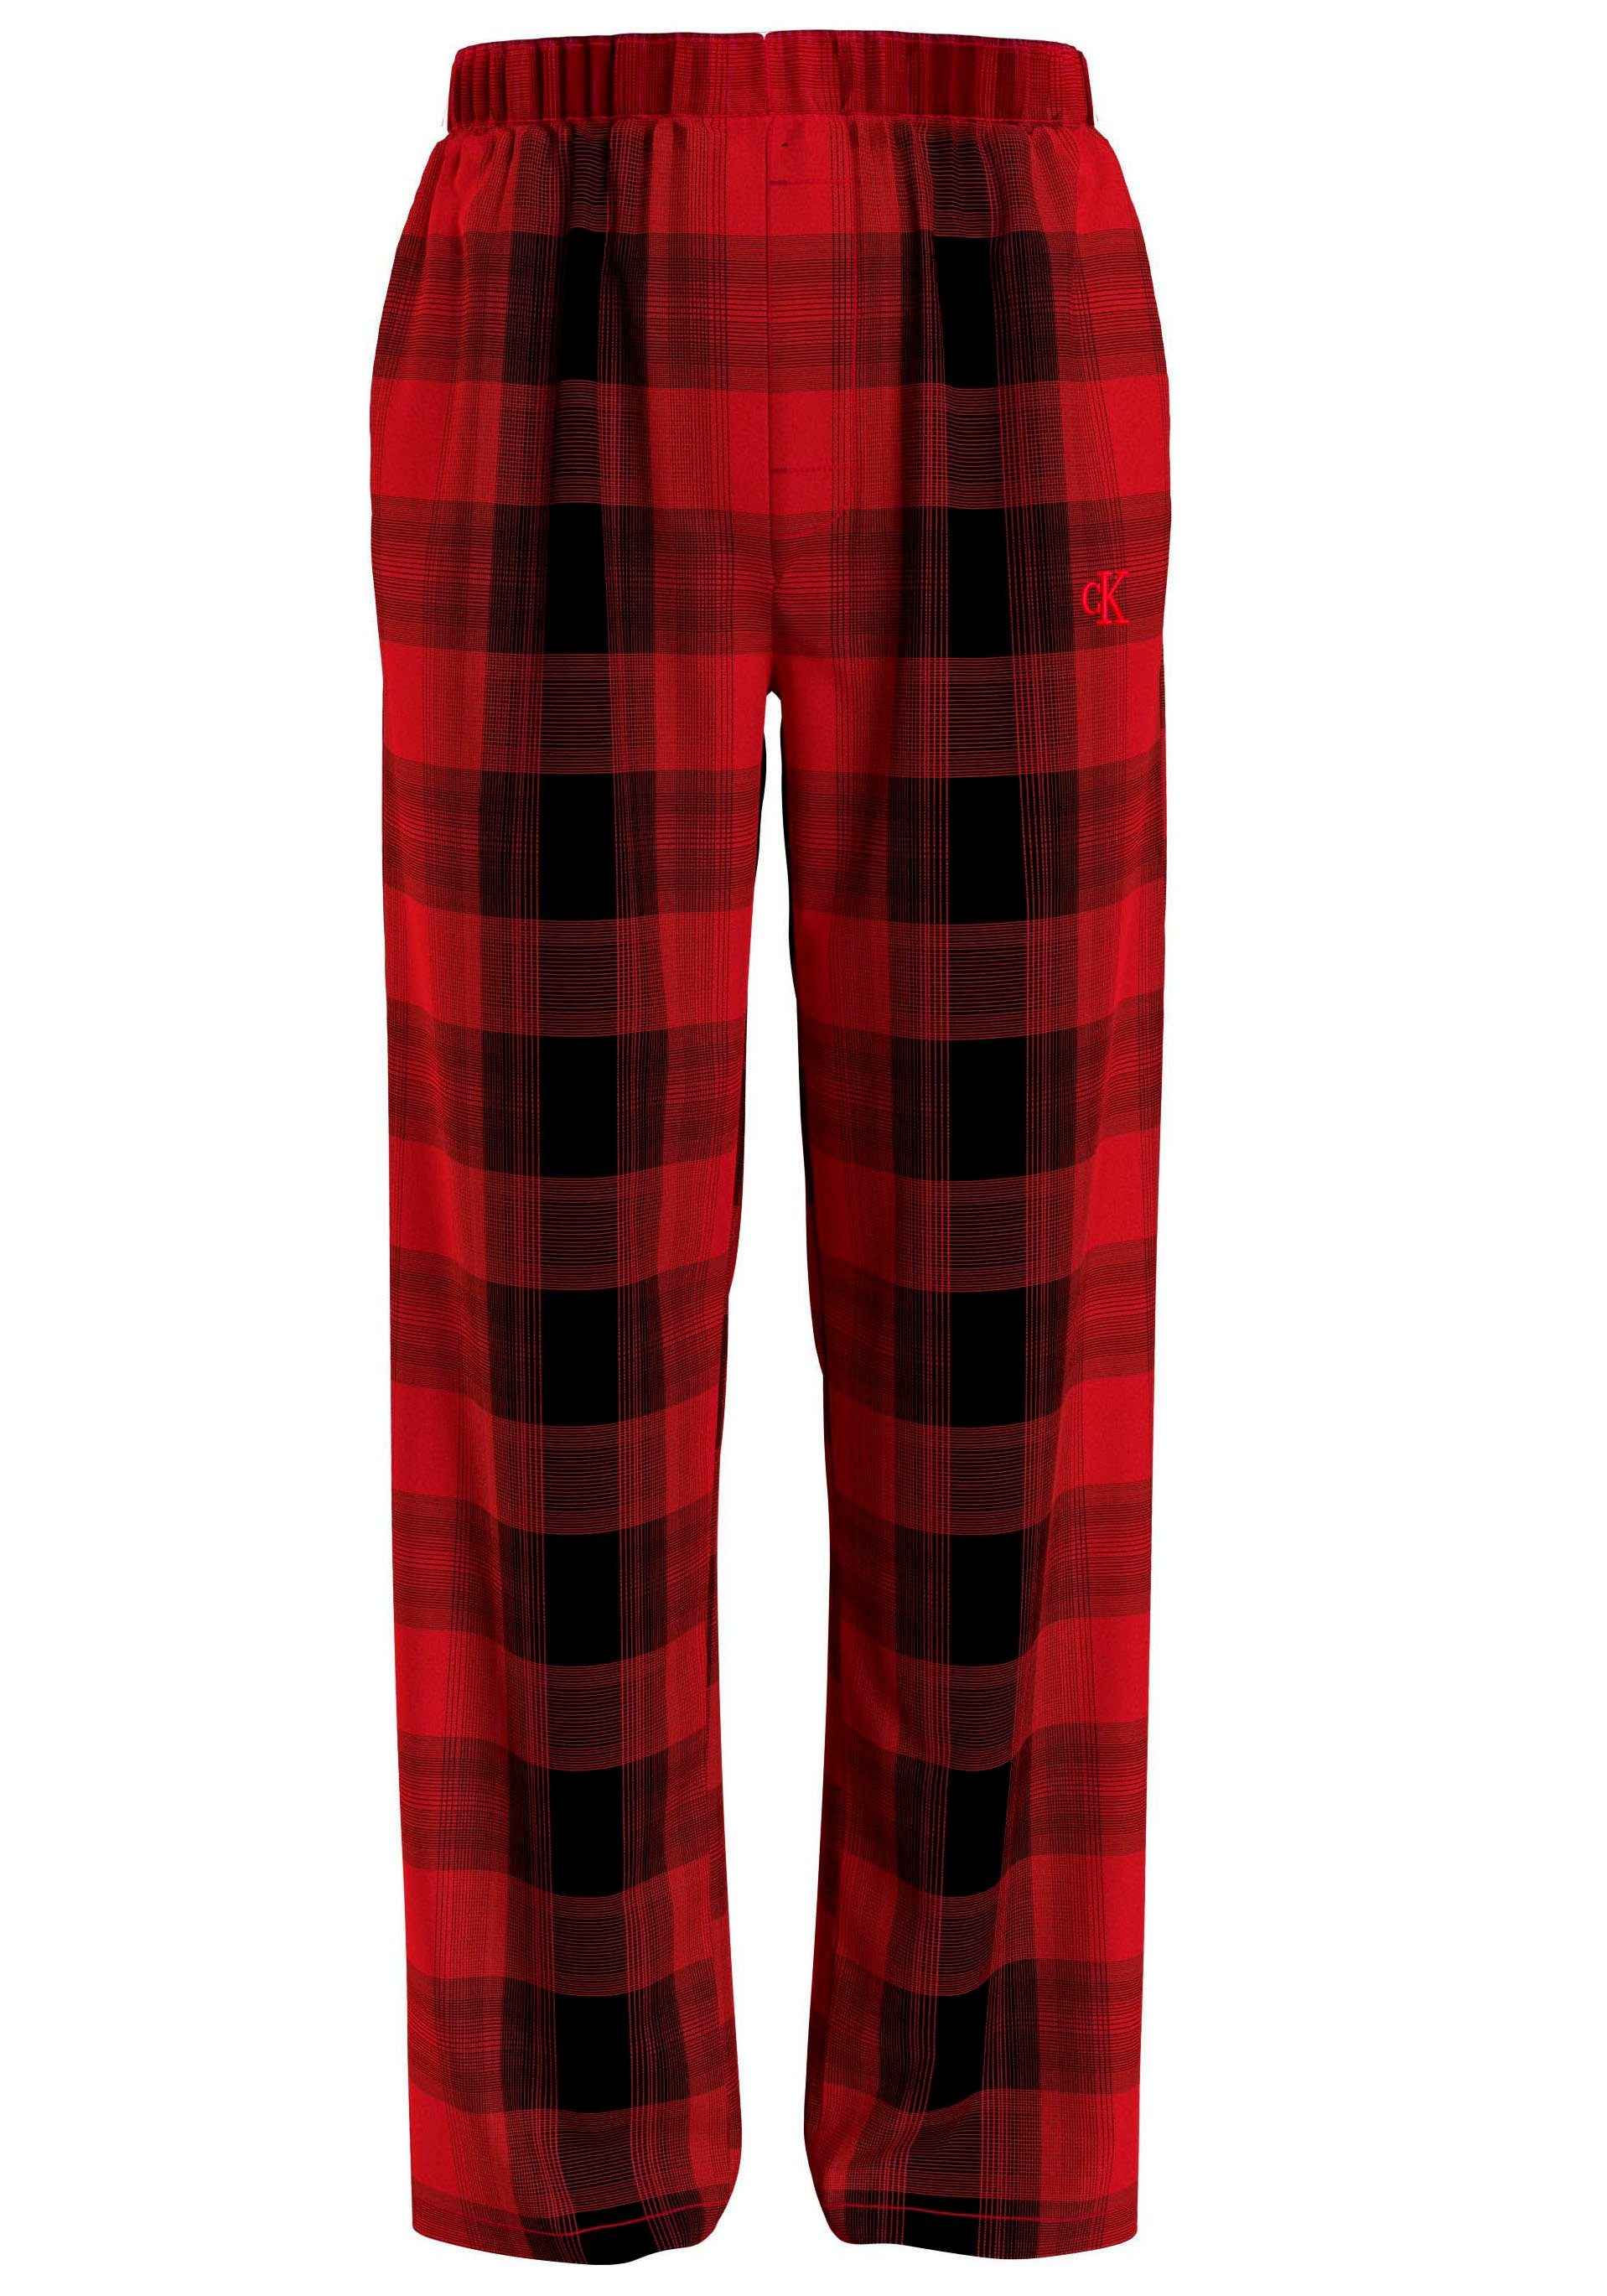 Calvin Klein Underwear Pyjamahose SLEEP PANT in karierter Optik | Pyjamahosen